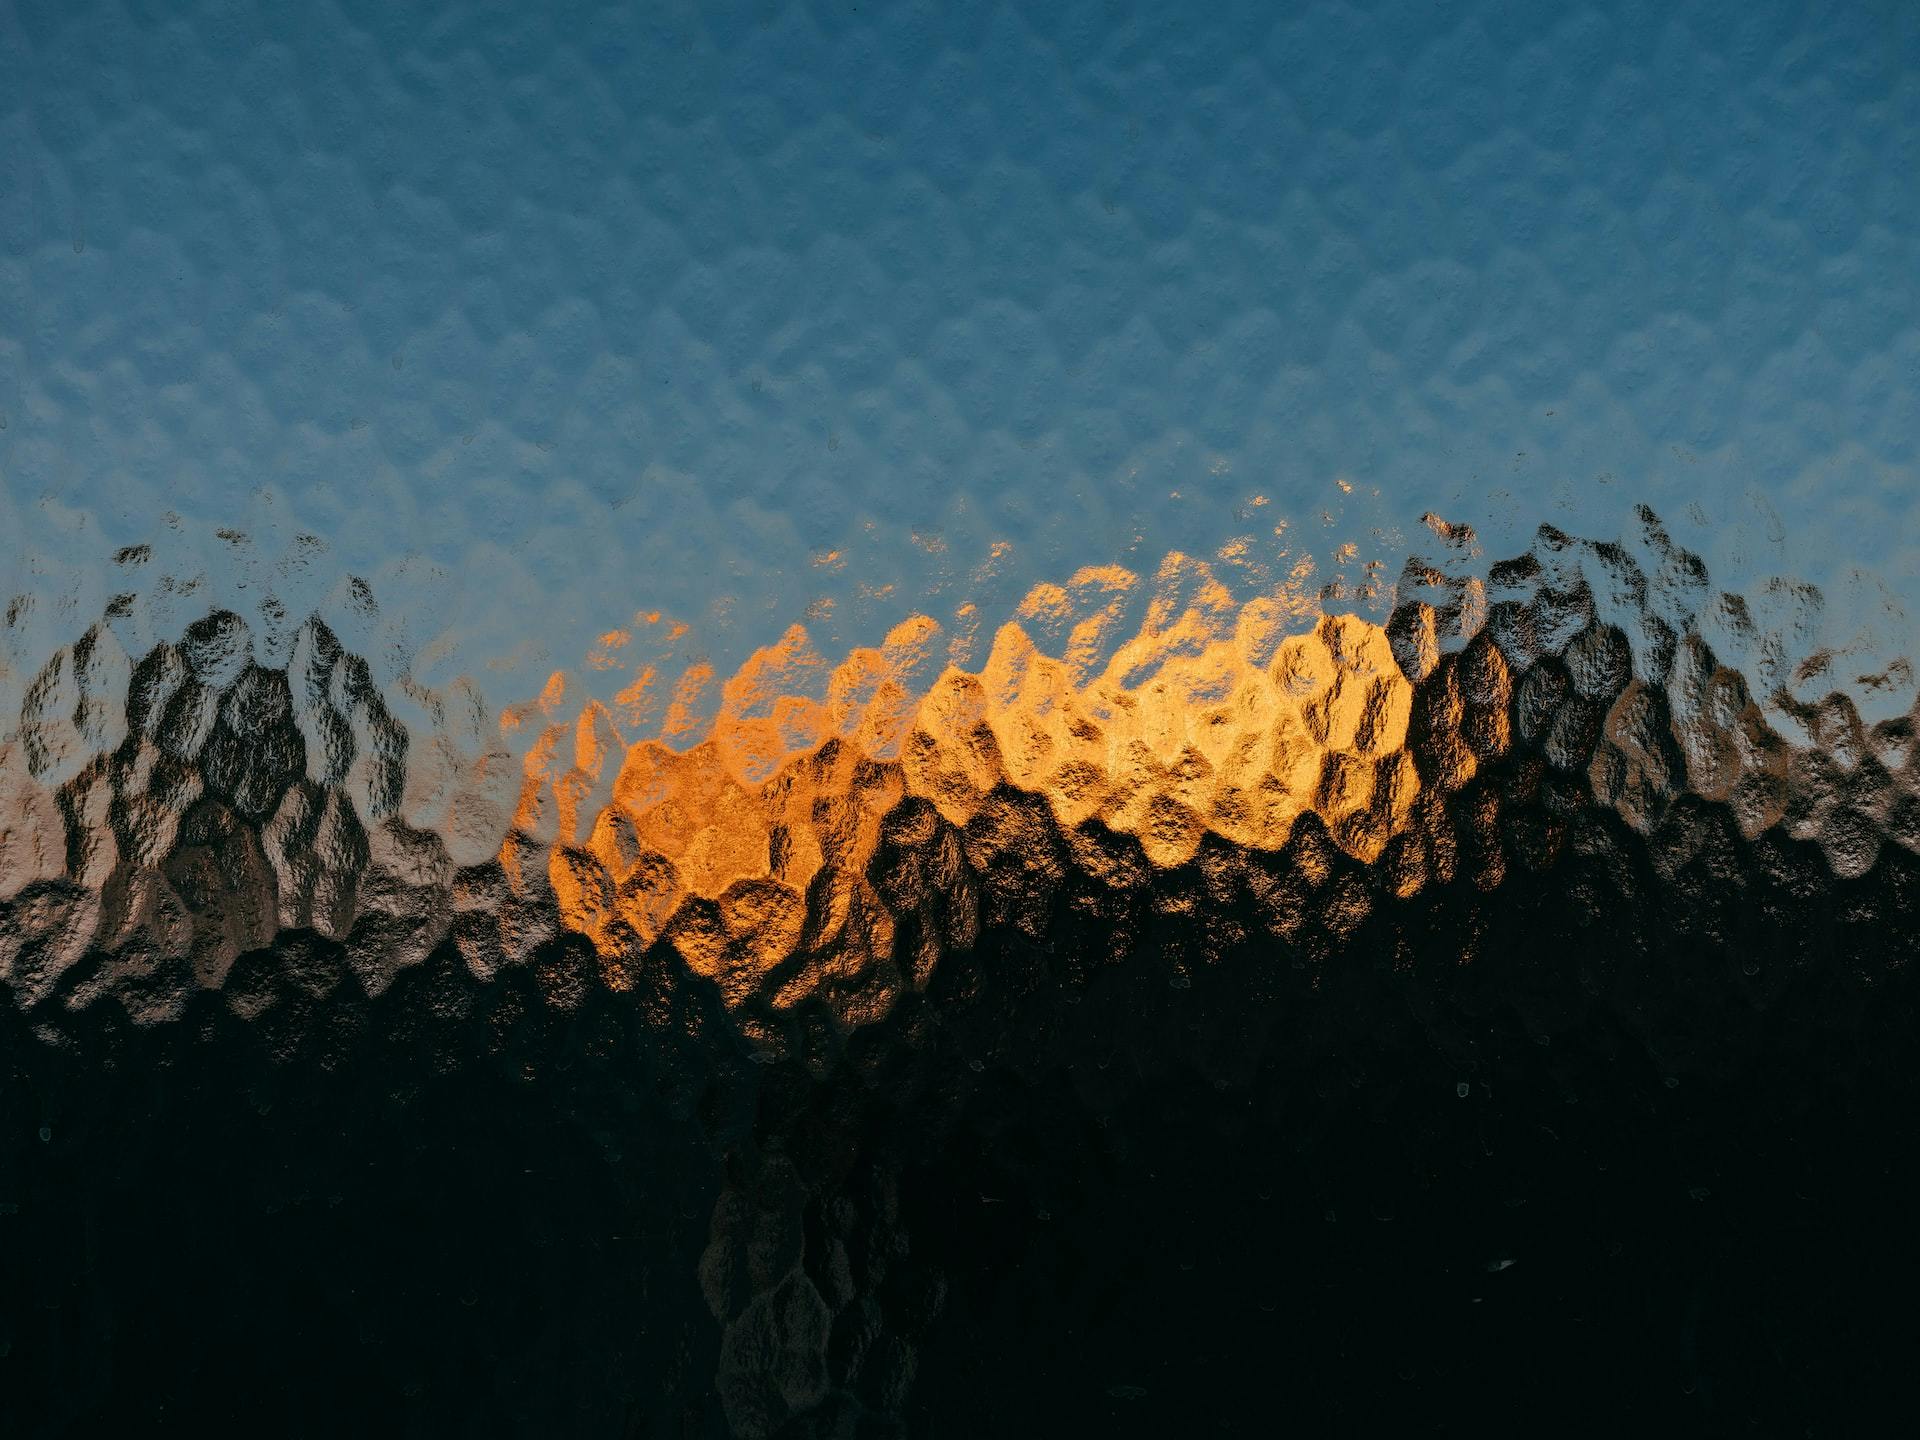 A bumpy reflective surface reflects irregular hexagons of blue, orange, and yellow light